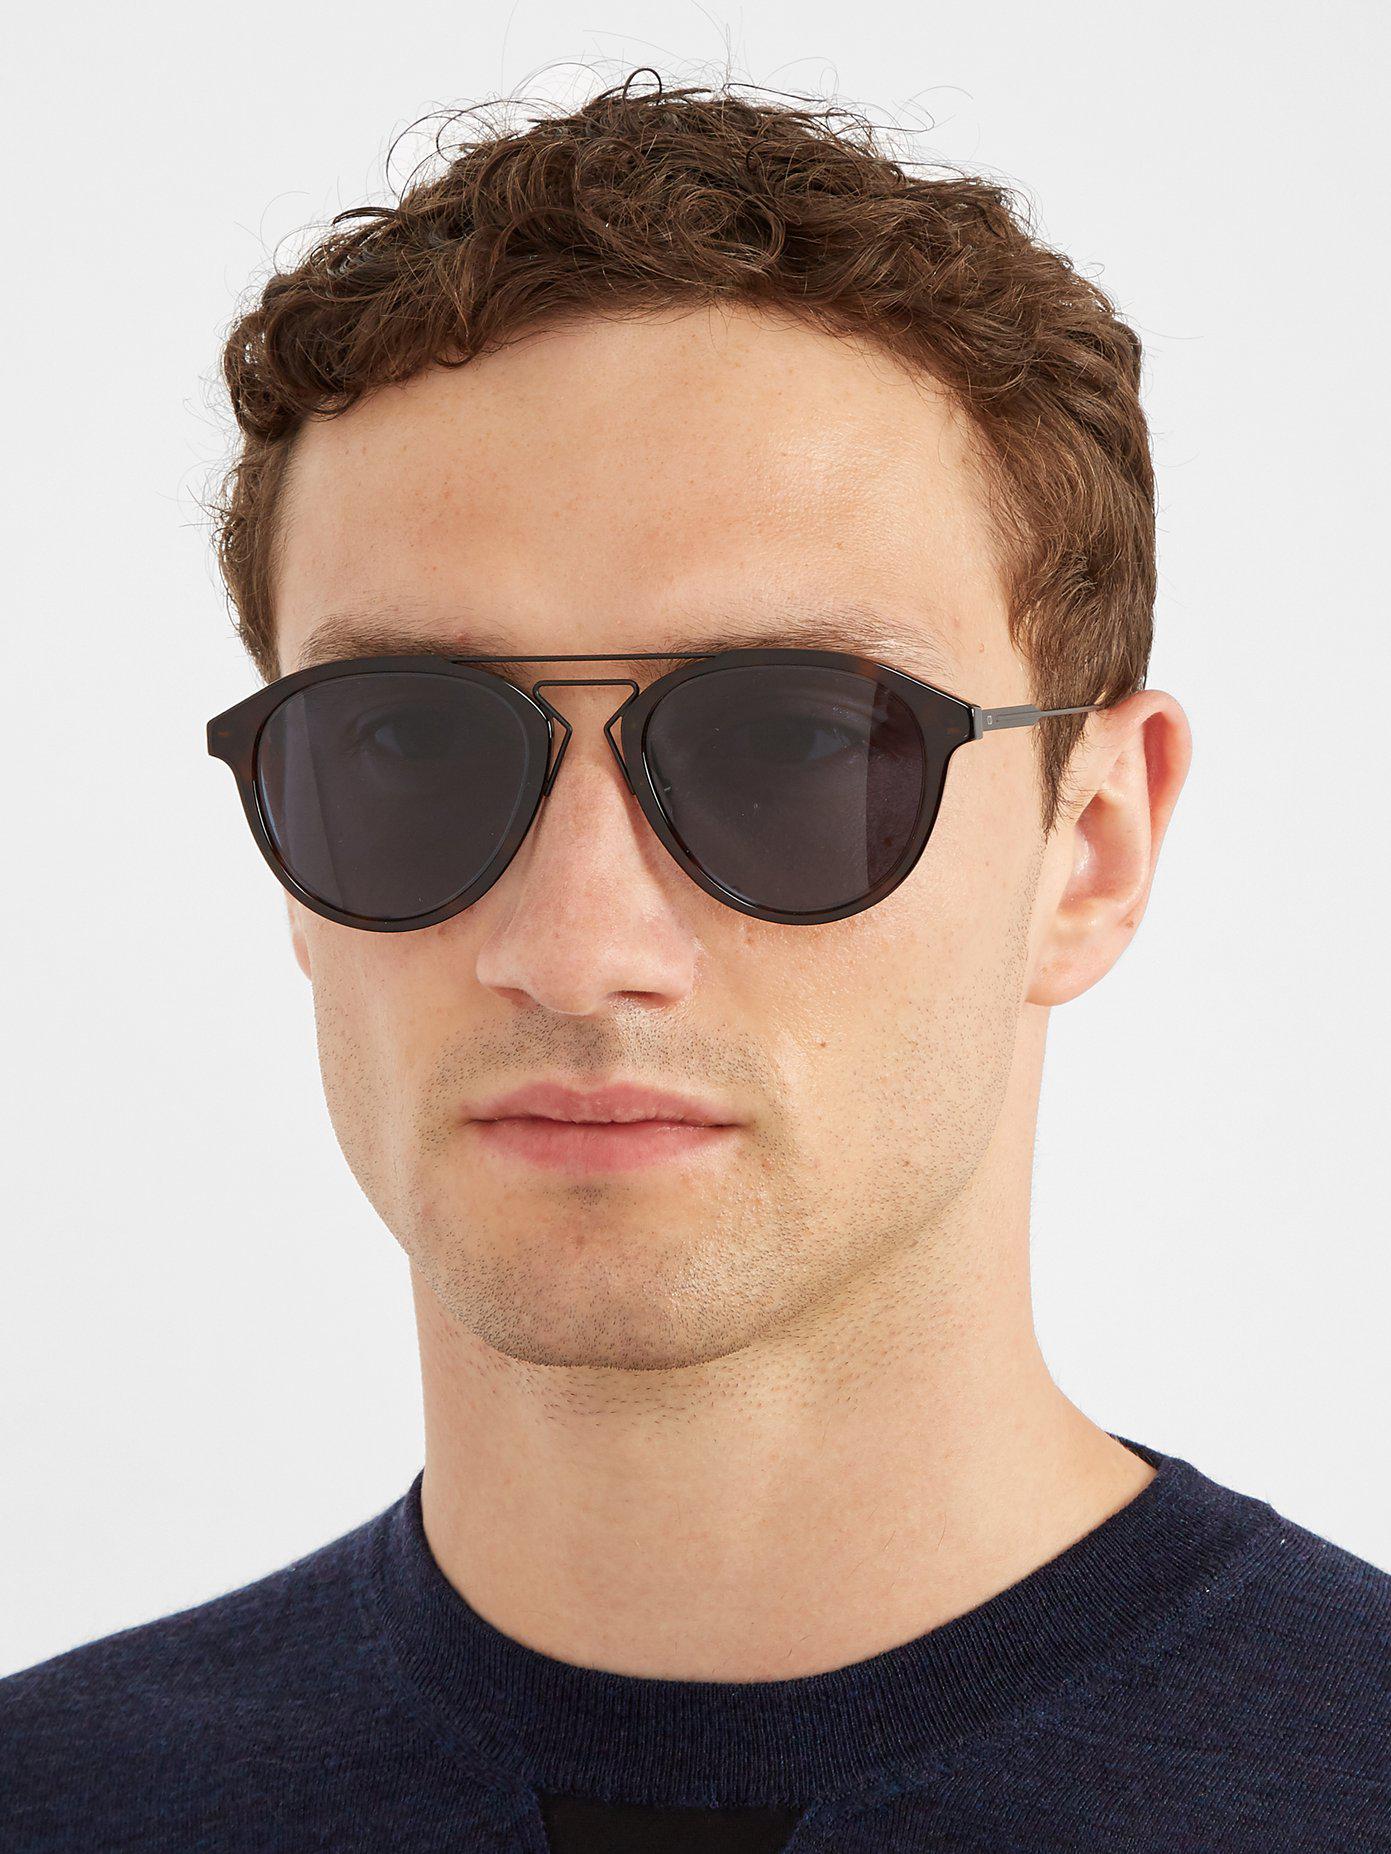 Chi tiết 78+ về dior blacktie sunglasses mới nhất